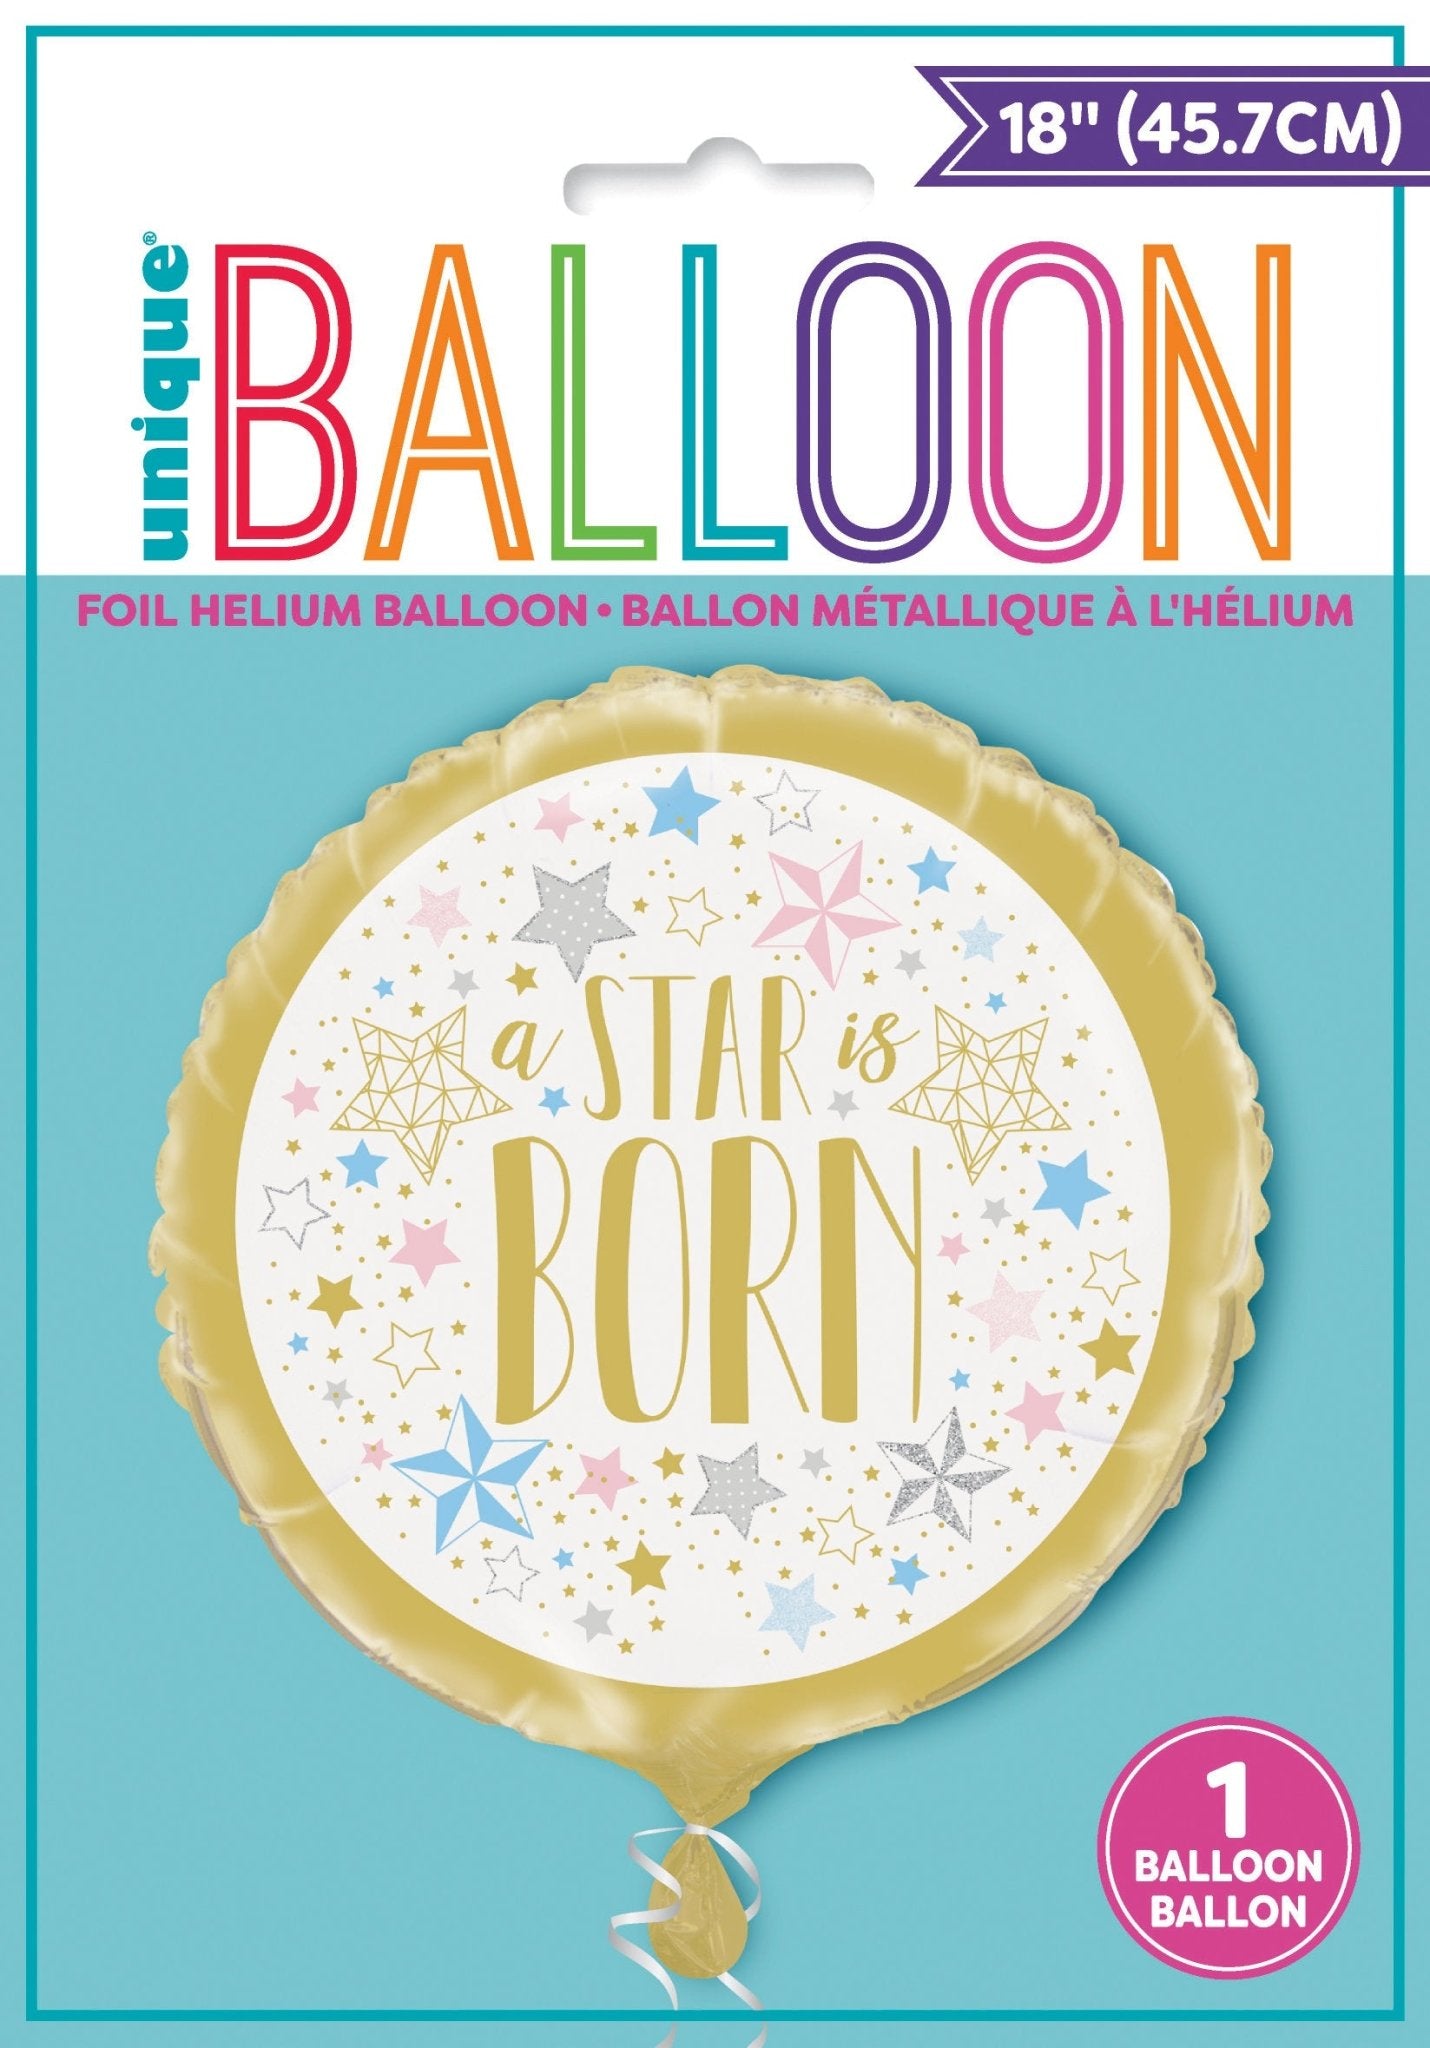 "A Star is Born" Balloon - Stesha Party